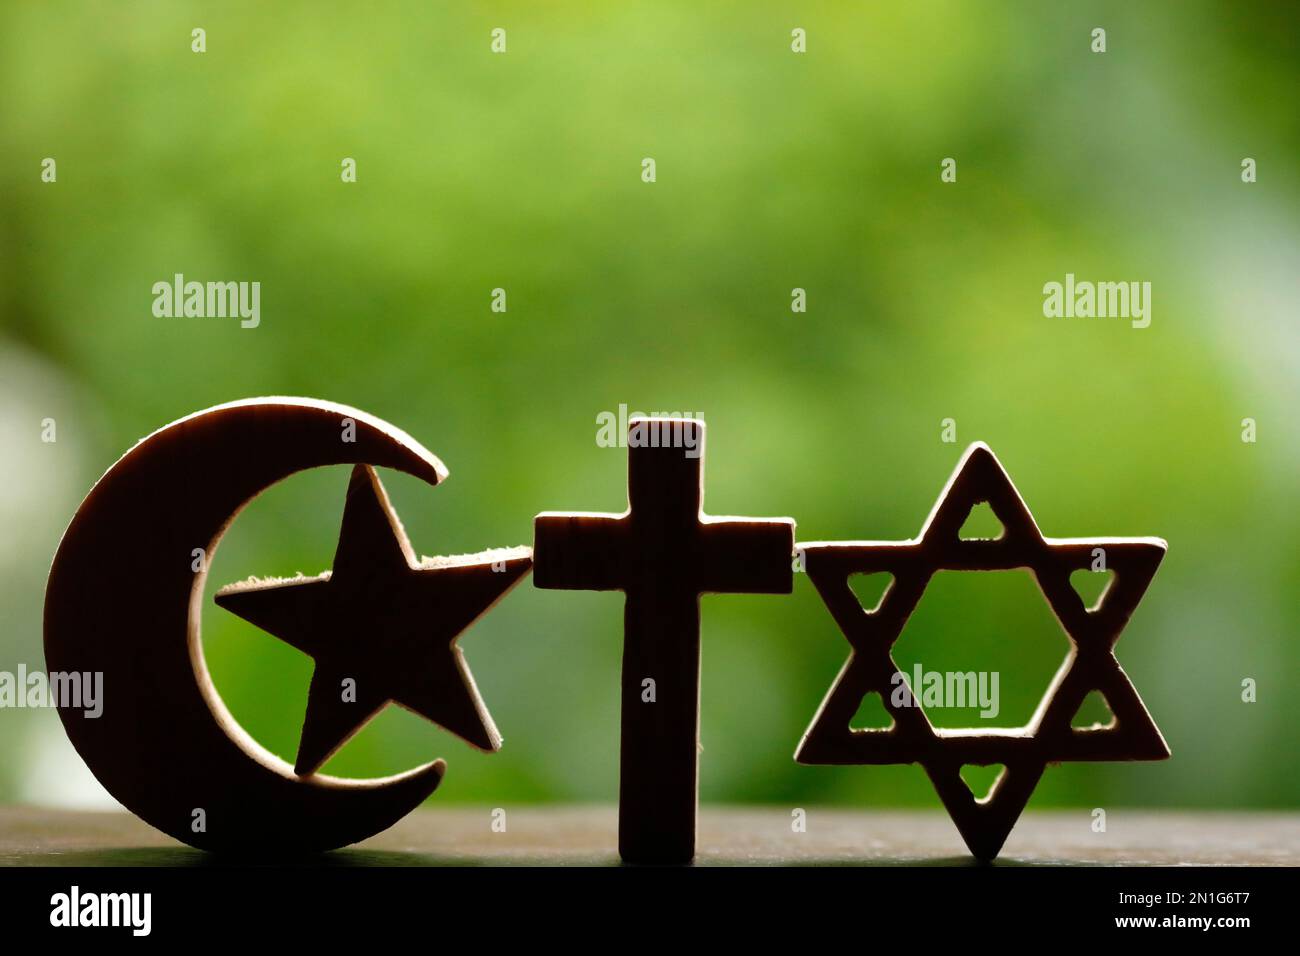 Religious symbols of Jewish Star of David, Muslim Star and Crescent, Christian Cross, interreligious and interfaith dialogue, Vietnam, Indochina, Sout Stock Photo